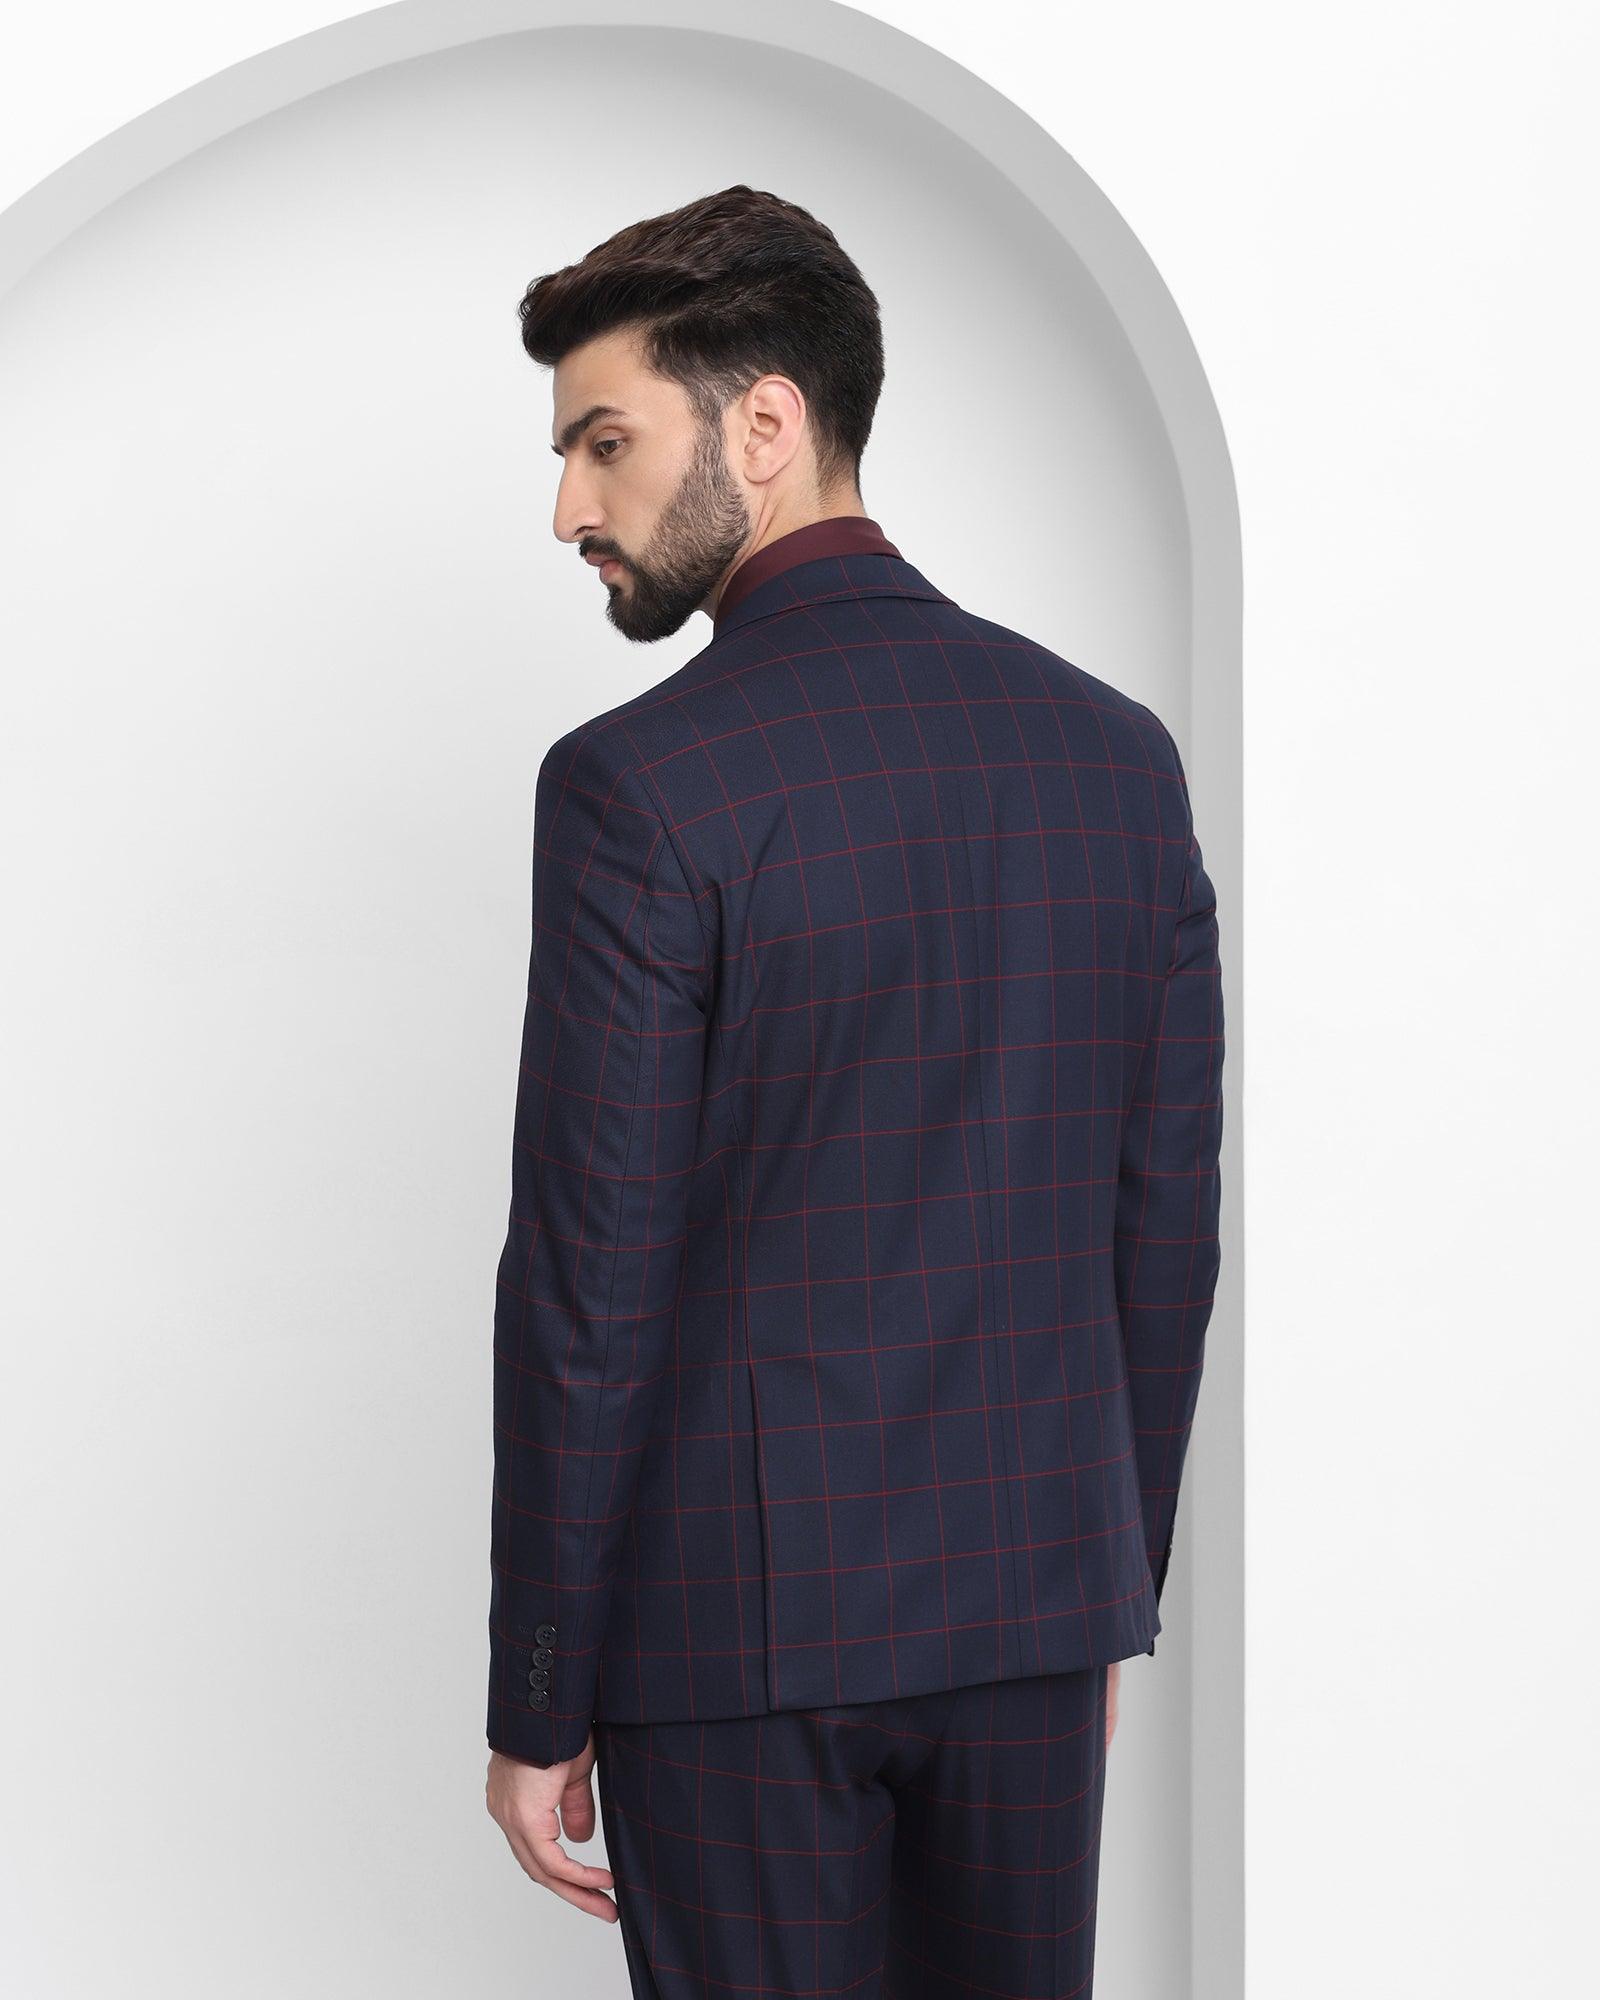 Black Check Suit - Selling Fast at Pantaloons.com